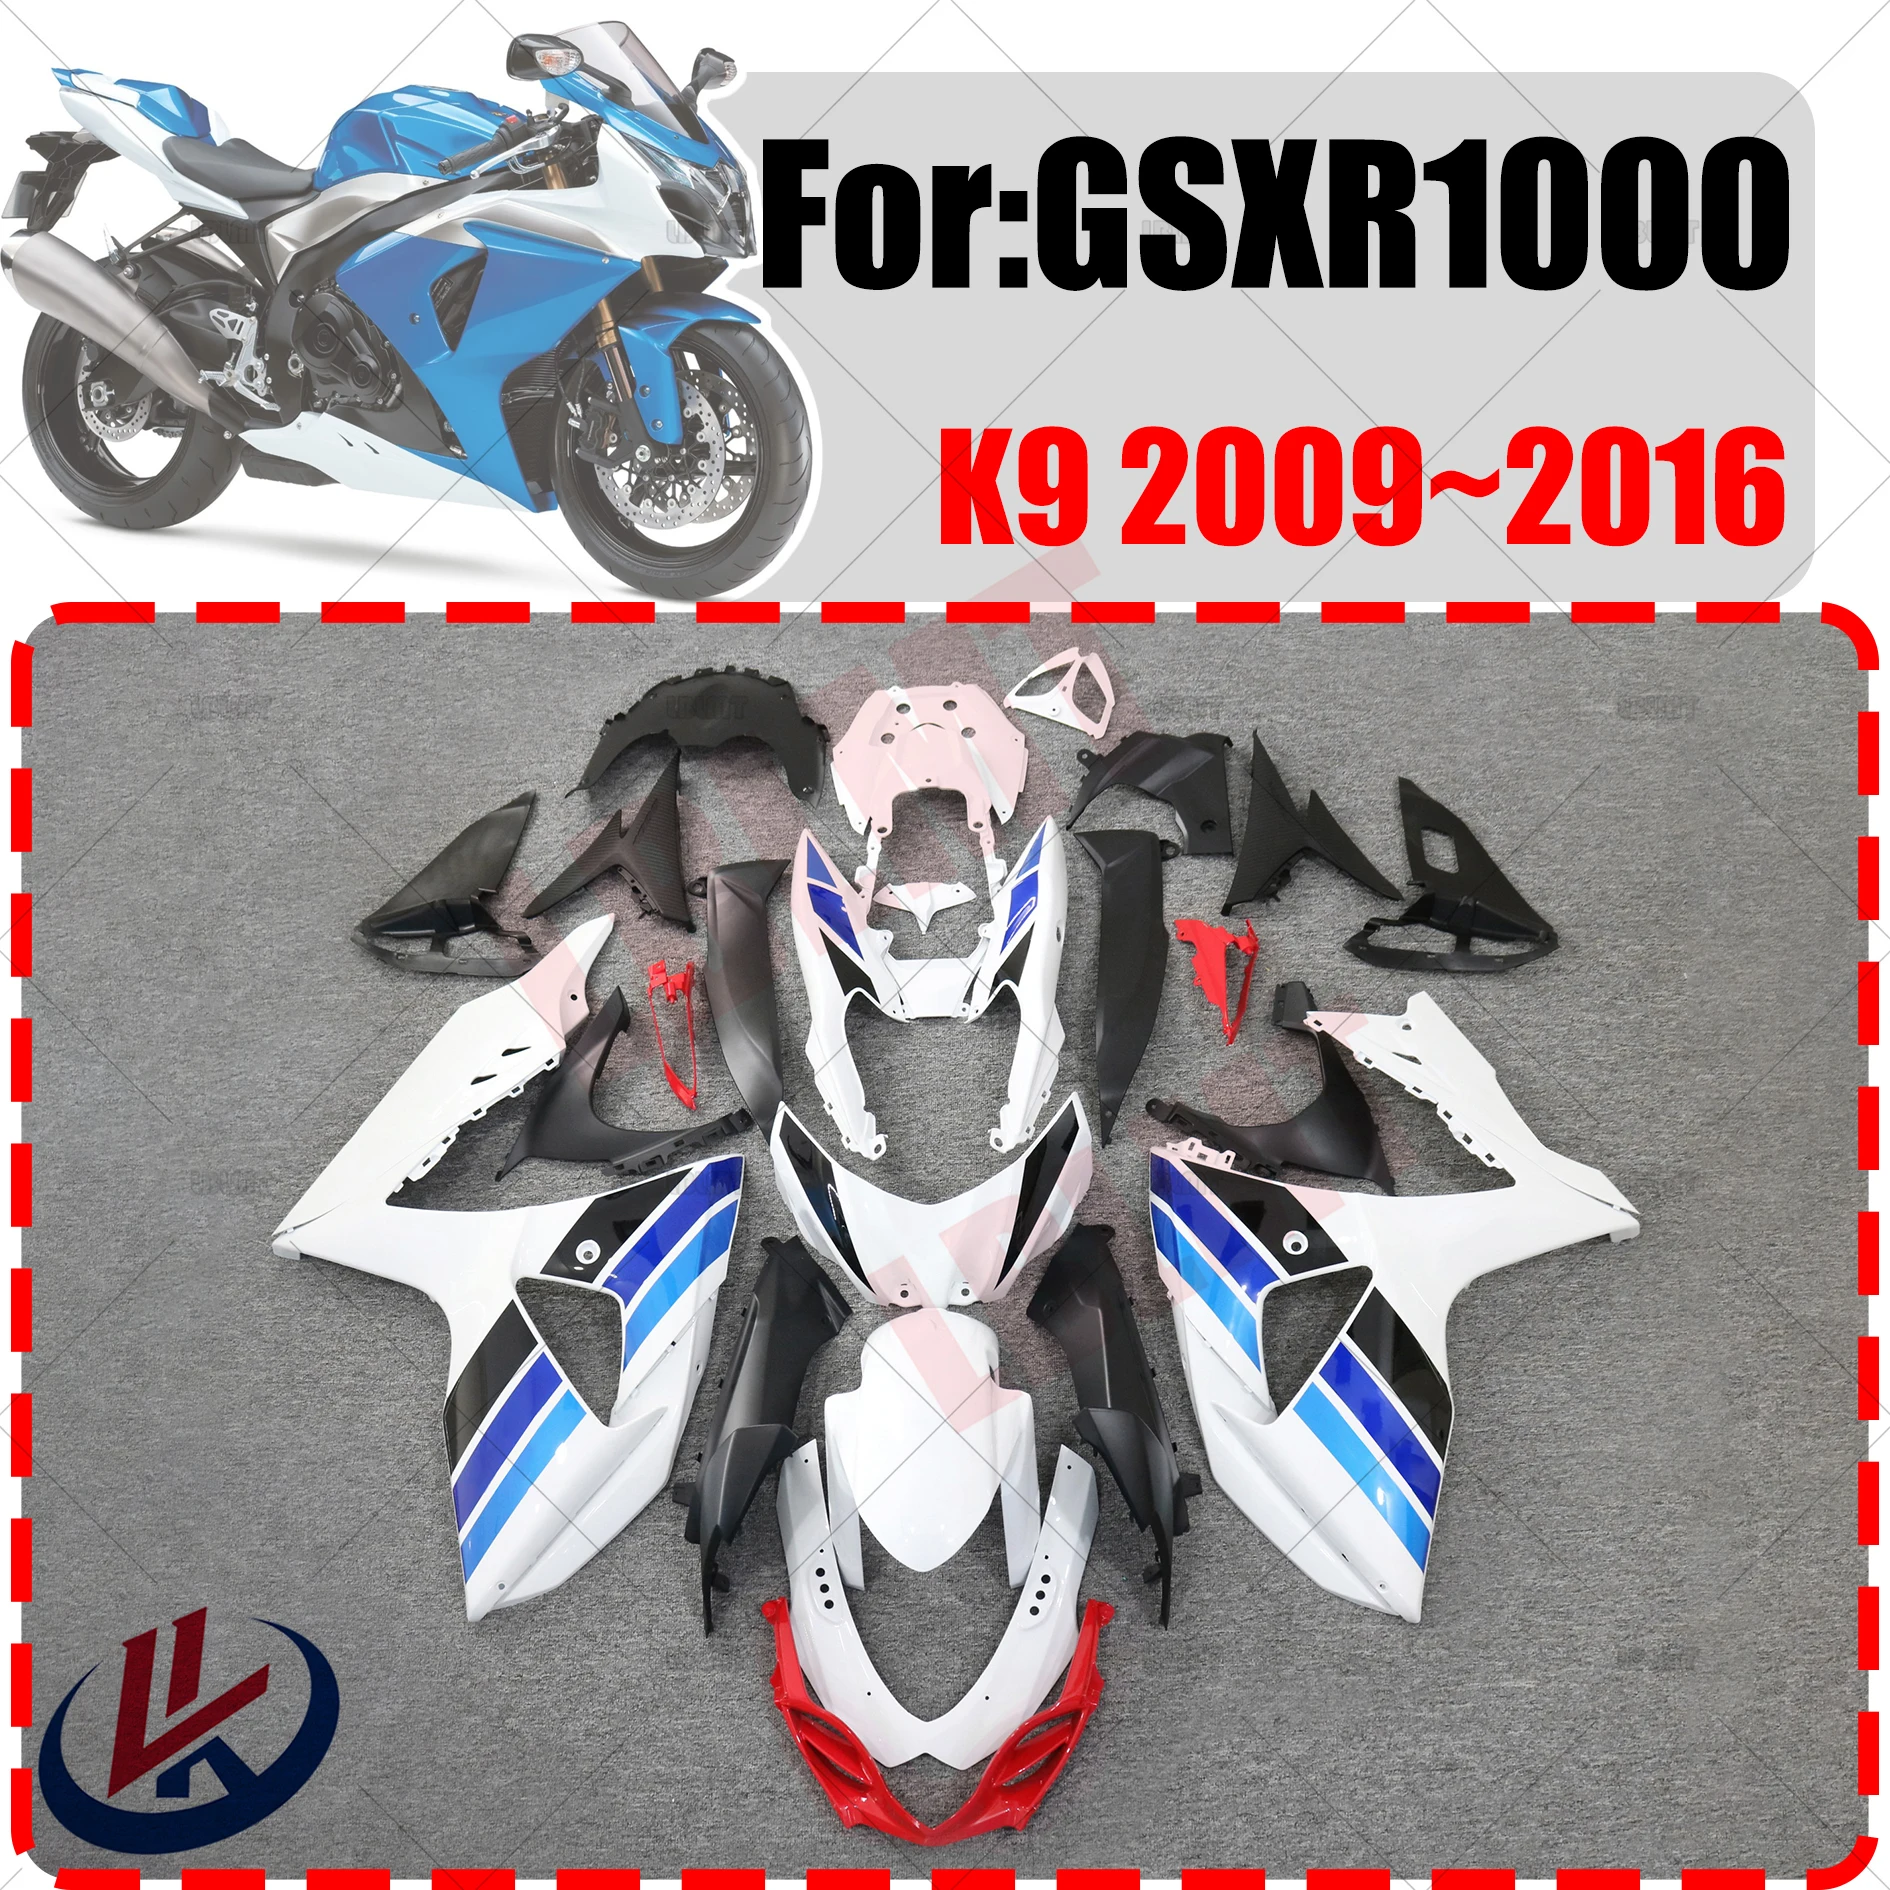 

Motorcycle Fairing Kit Fit For SUZUKI GSXR1000 GSXR 1000 GSX-R1000 K9 2009 2010 2011 2012 2013 2014 2015 2016 K9 Full Fairings